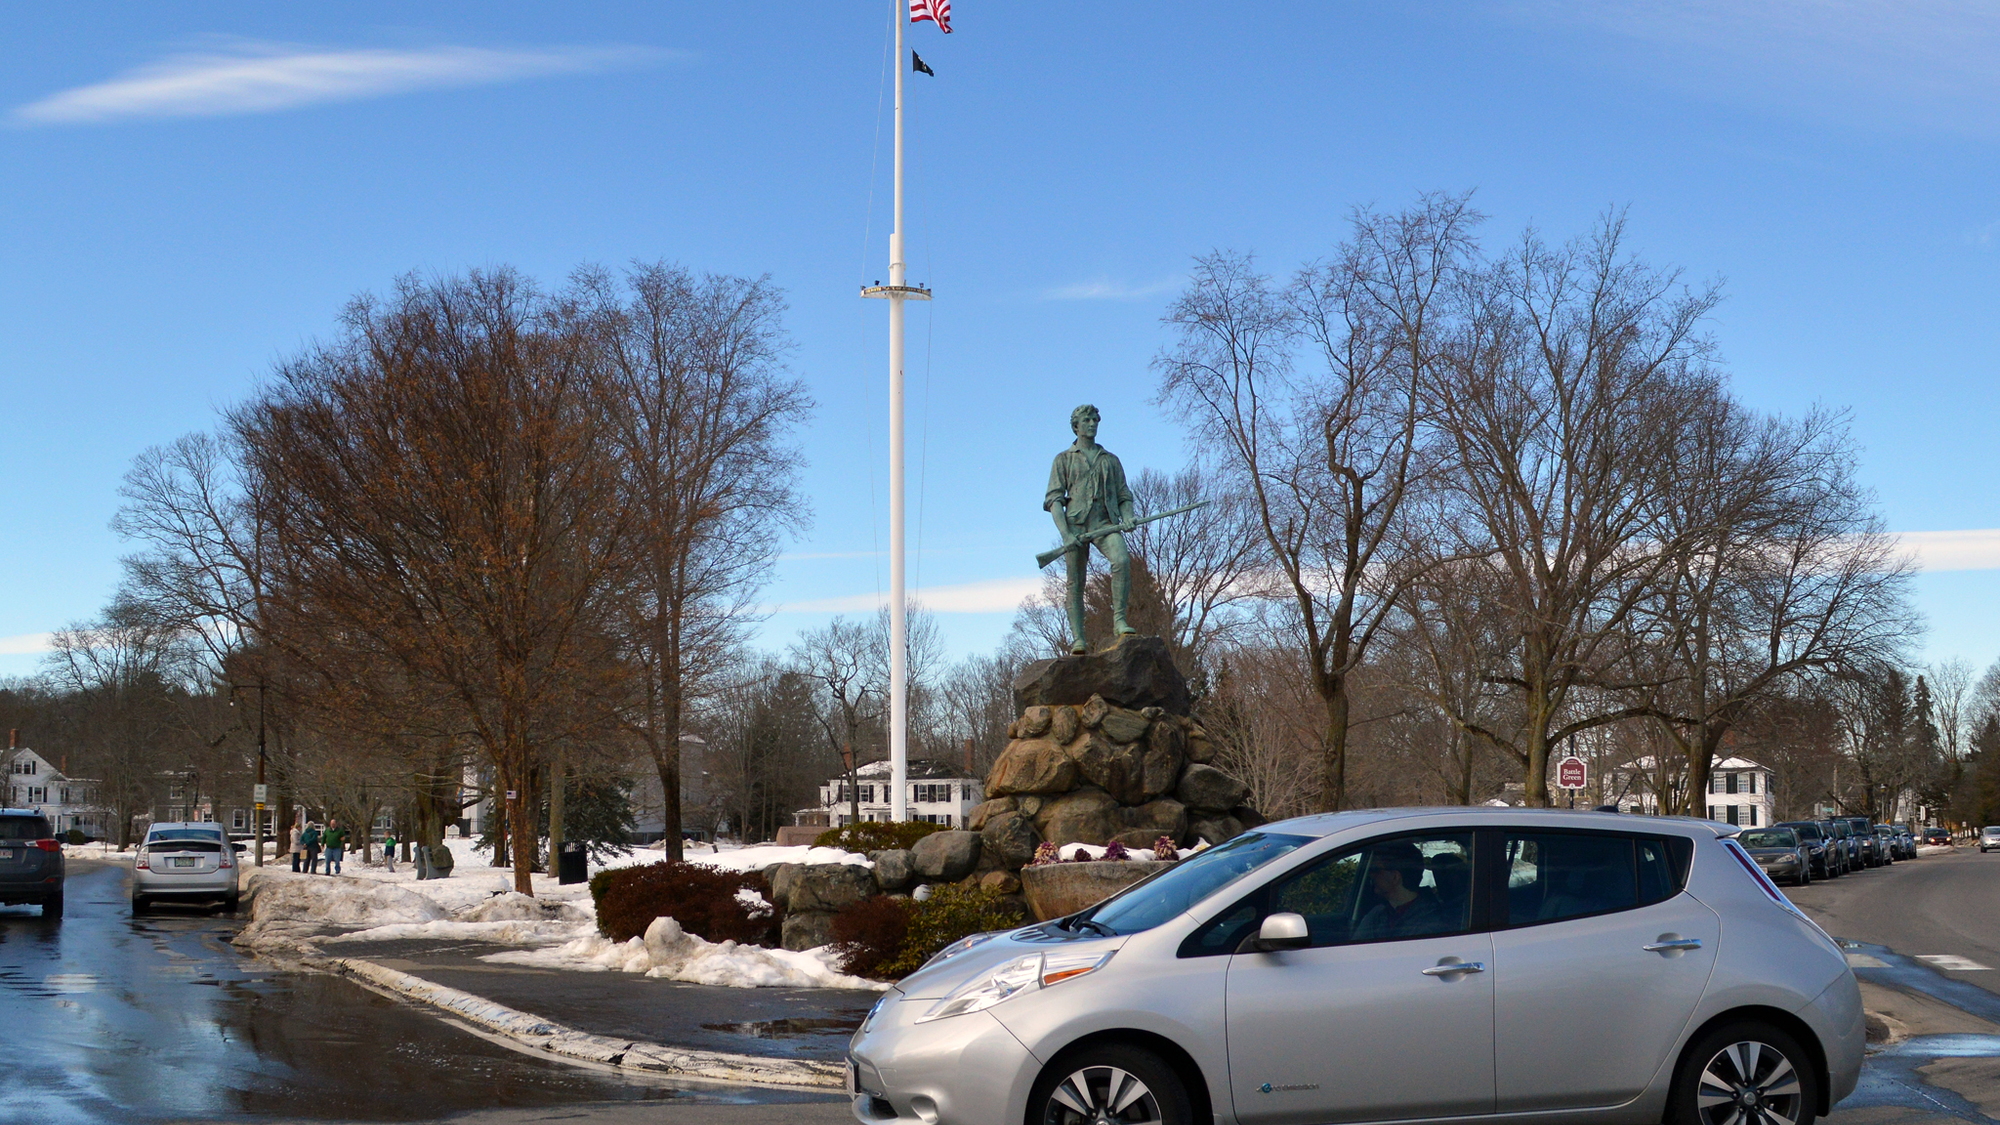 2015 Nissan Leaf at Lexington Minuteman statue, Boston [photo: John Briggs]